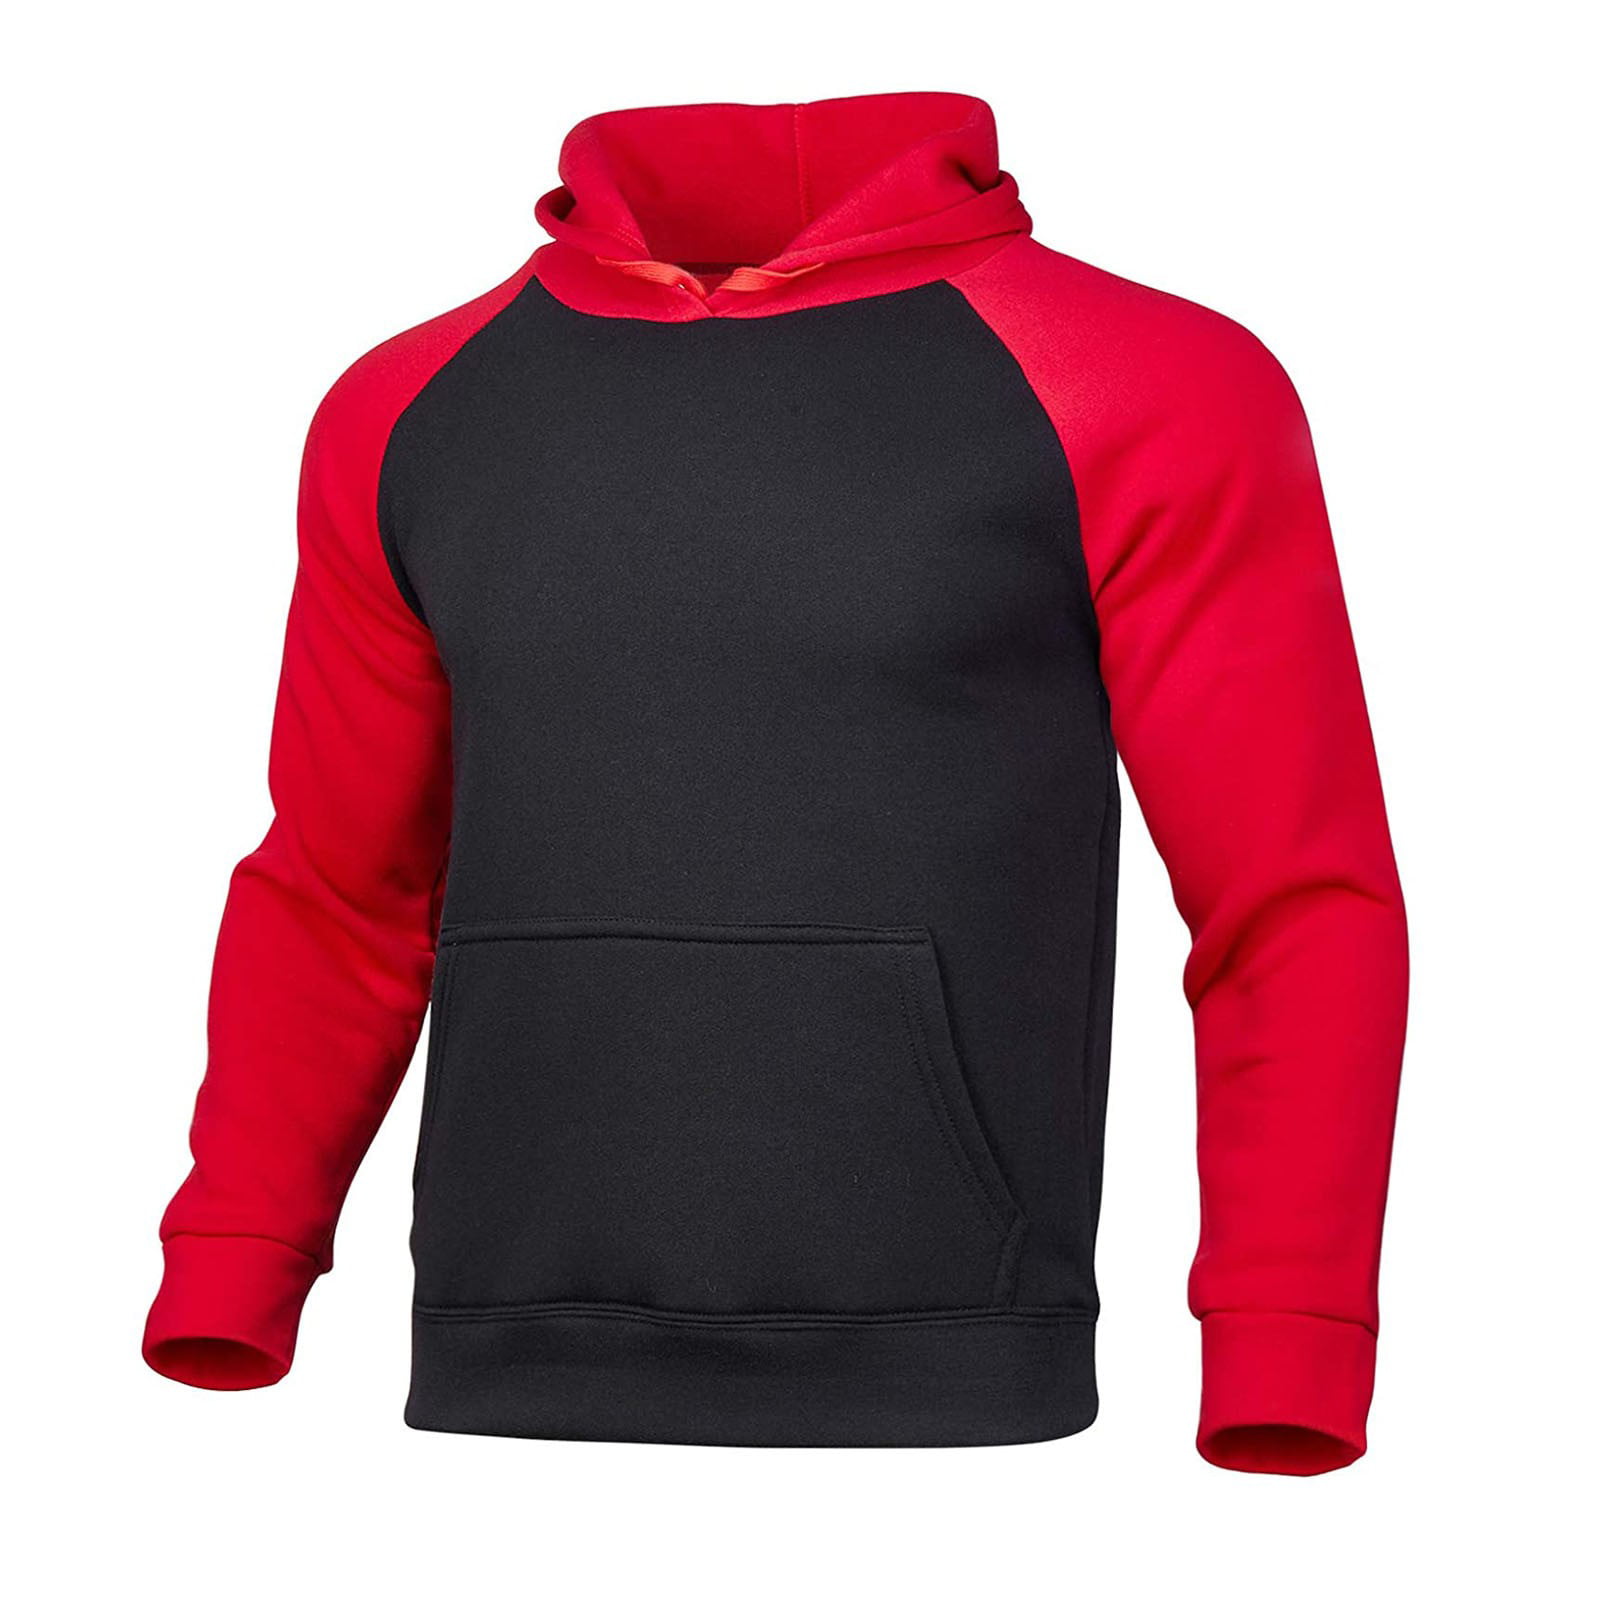 Red Men's Winter Sport Wear Tracksuit Clothes Outfits Set Sweatshirt+Long  Sweatpants 